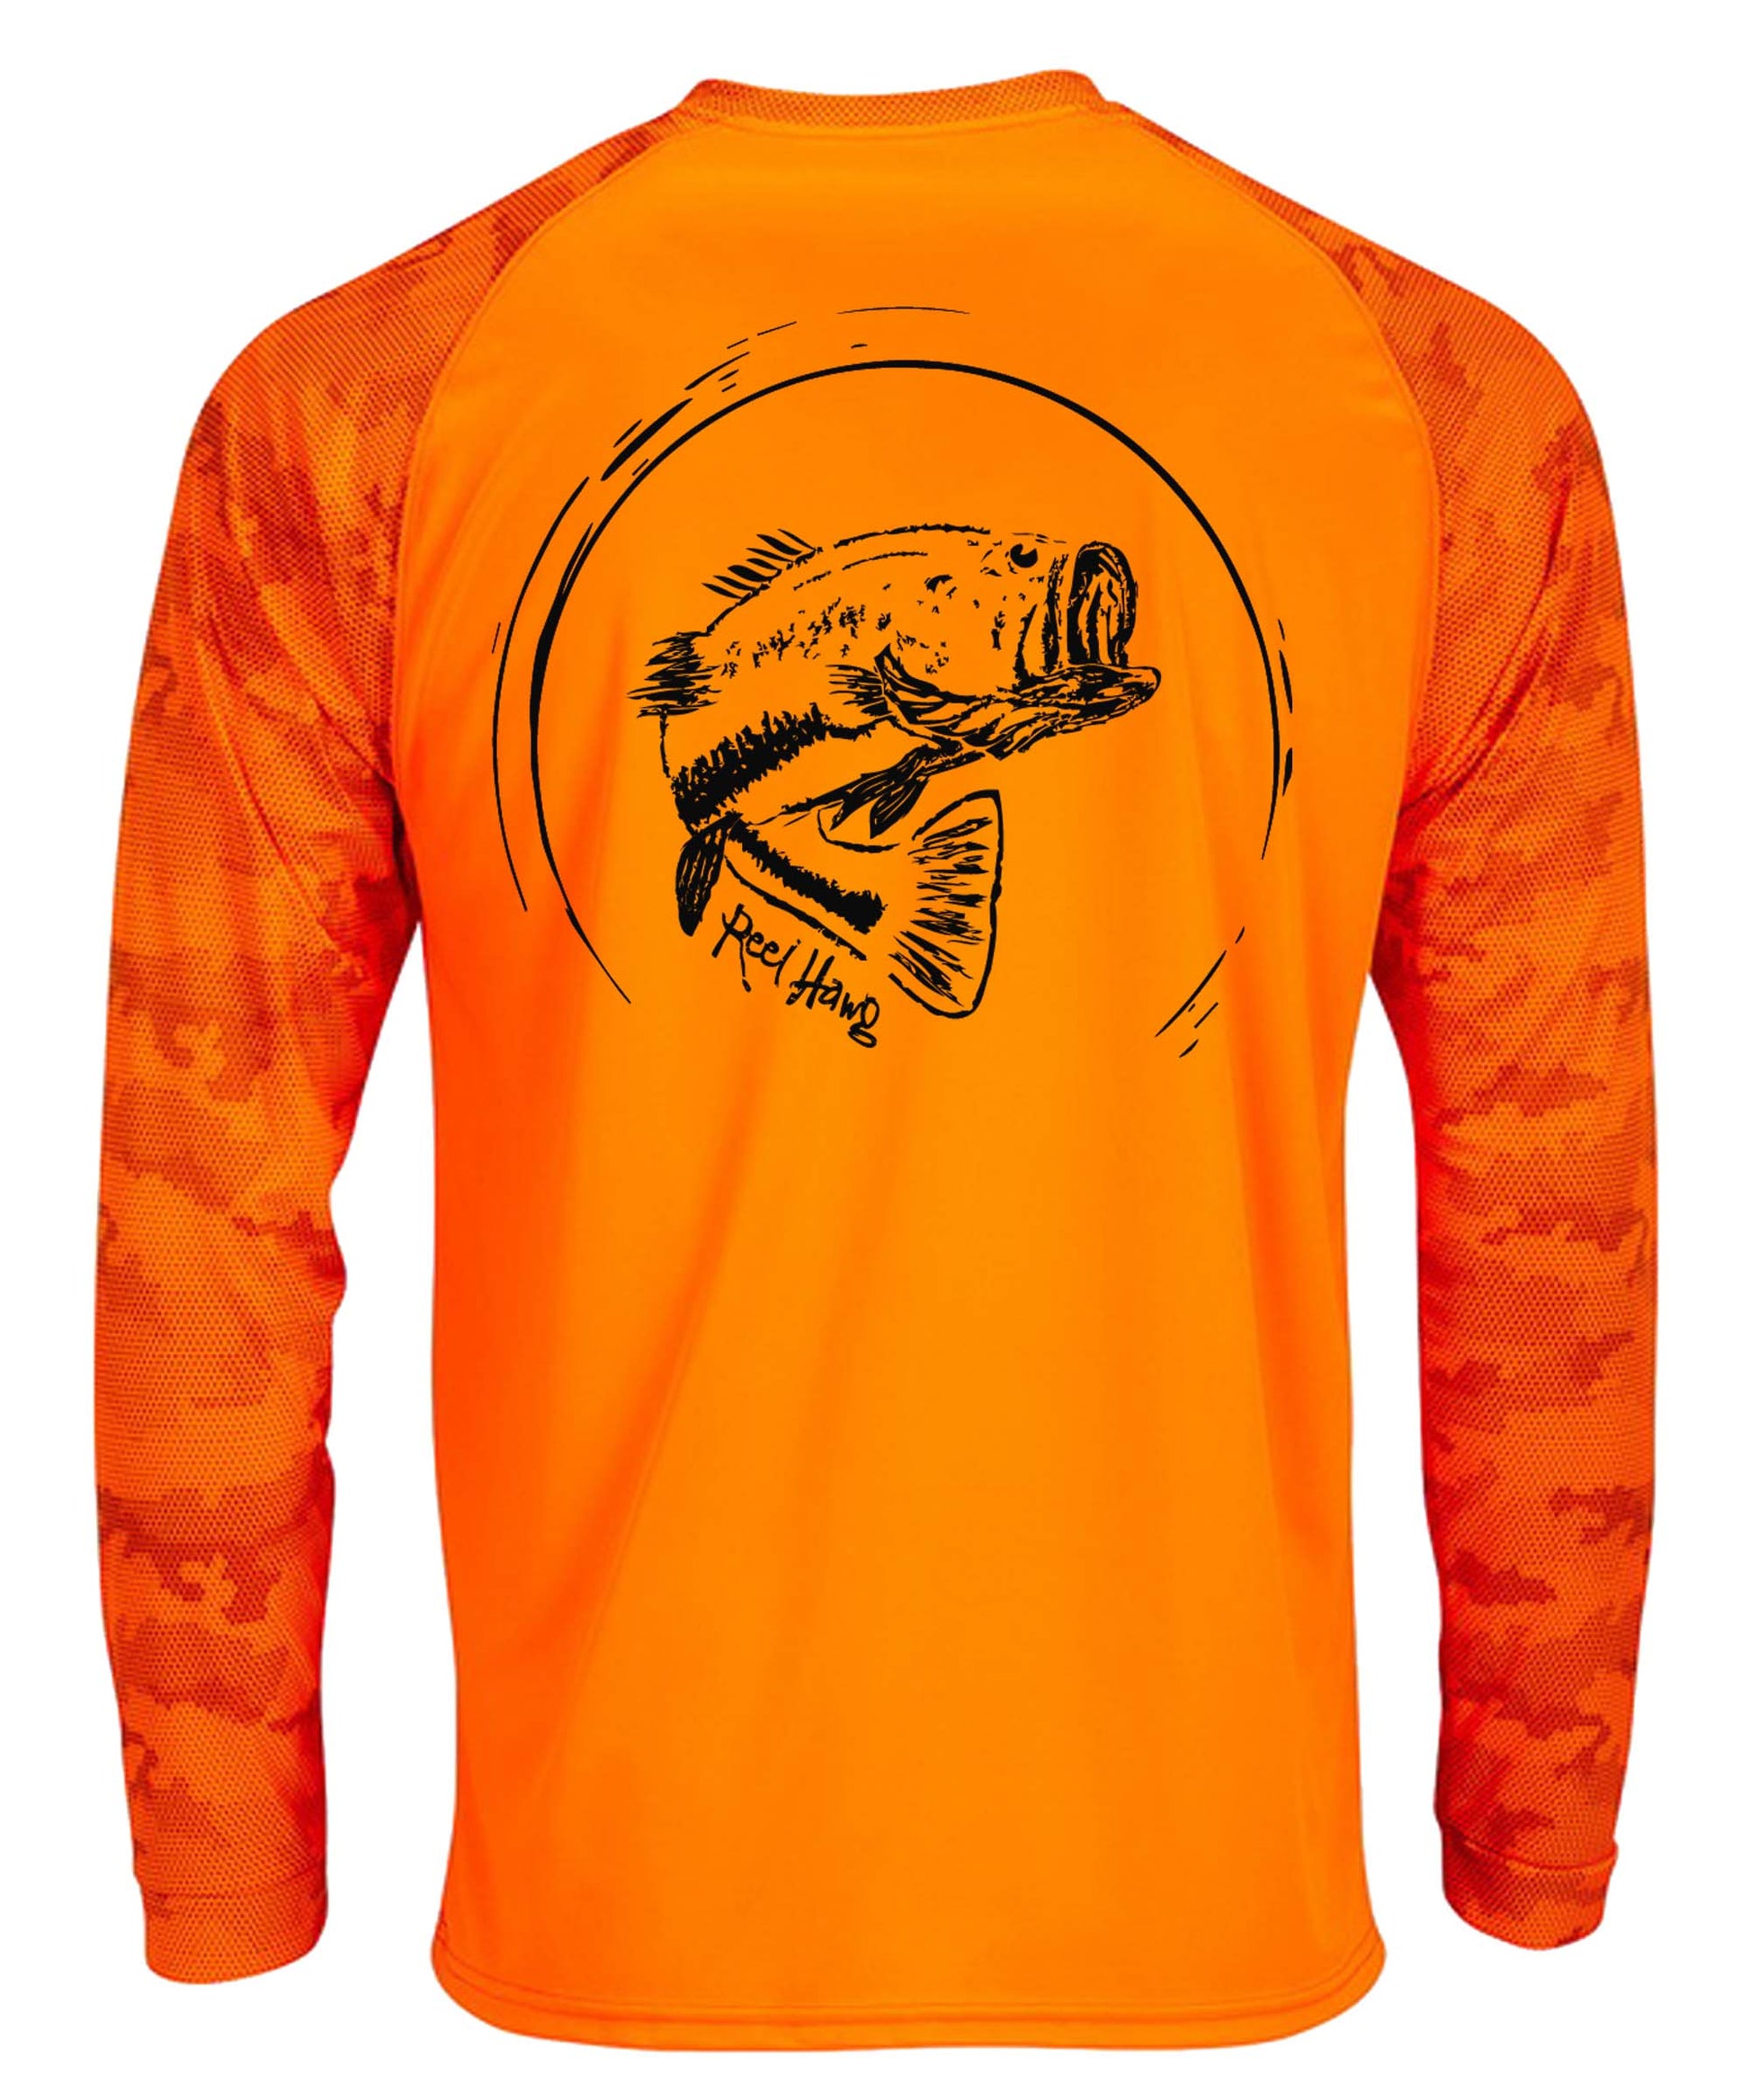 Bass fishing "Reel Hawg" neon orange performance digital camo long sleeve shirt with 50+ UV sun protection by Reel Fishy